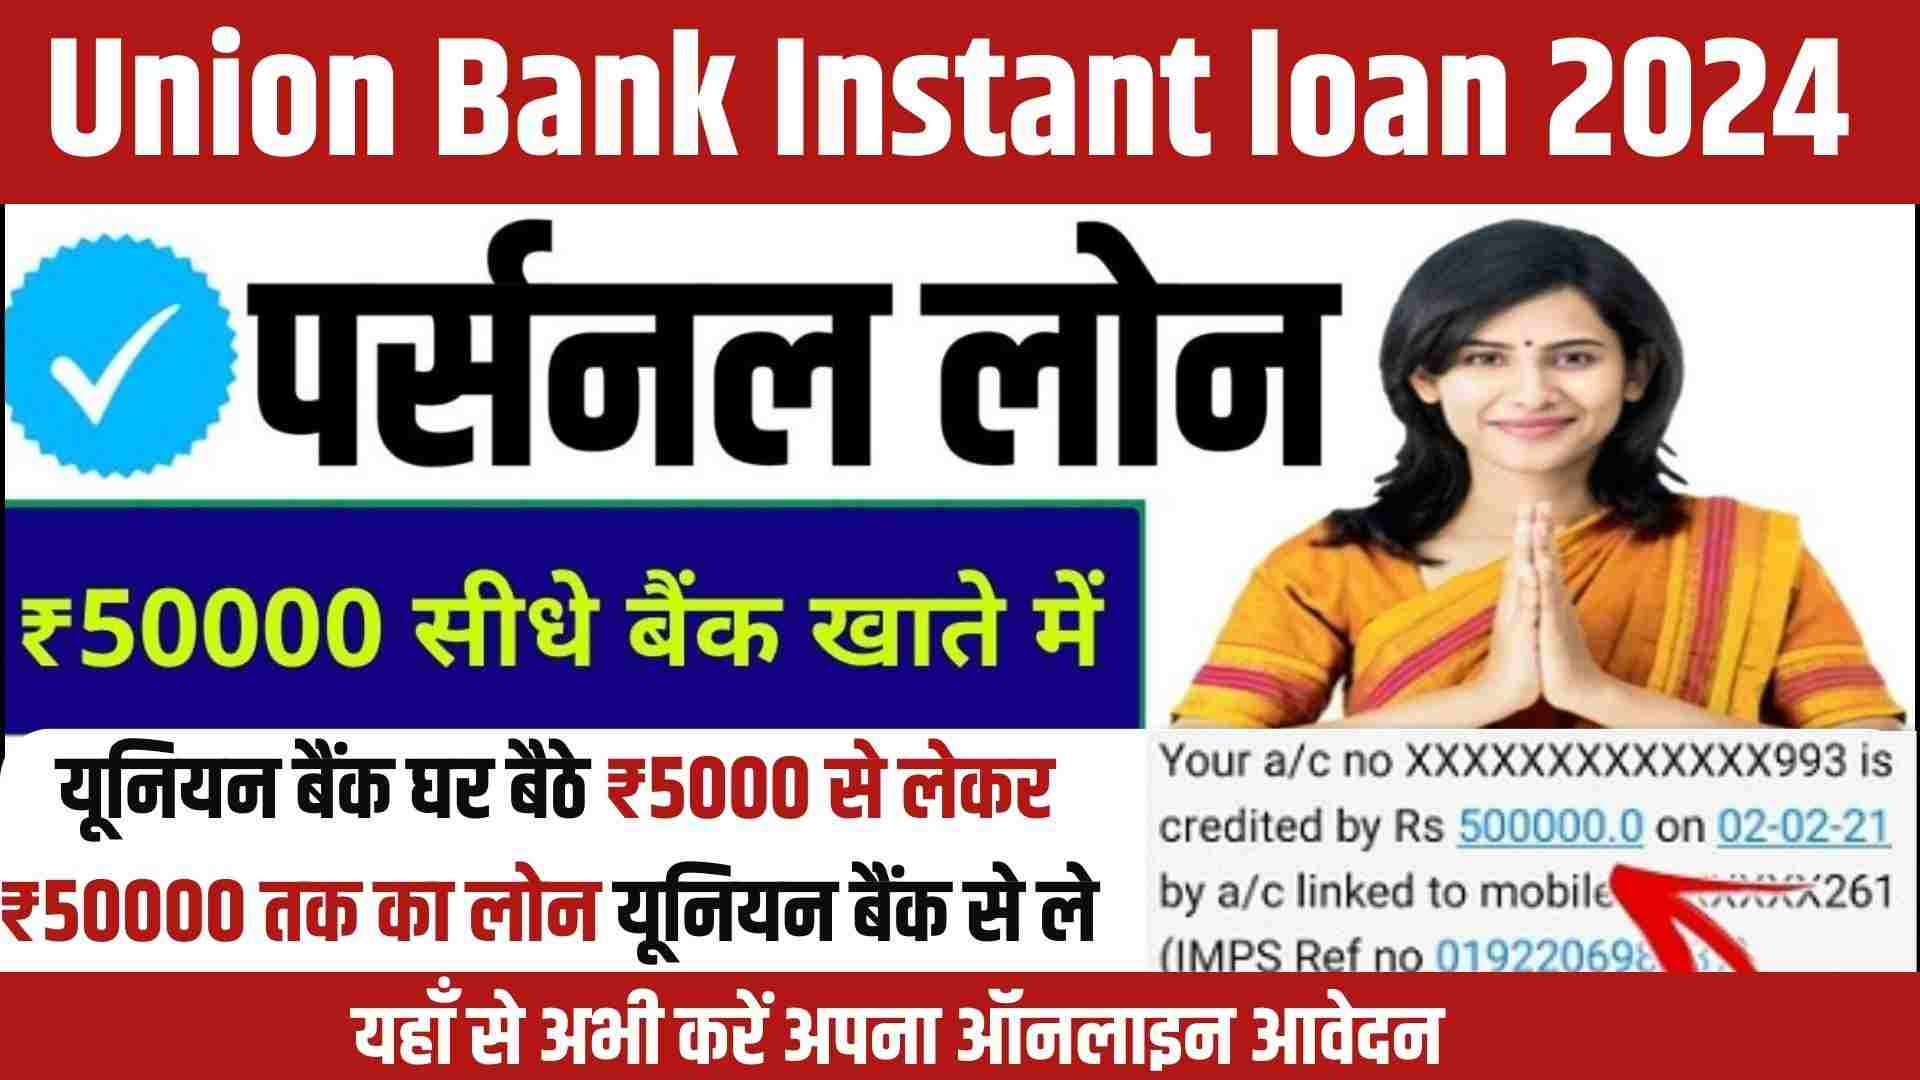 Union Bank Personal Loan